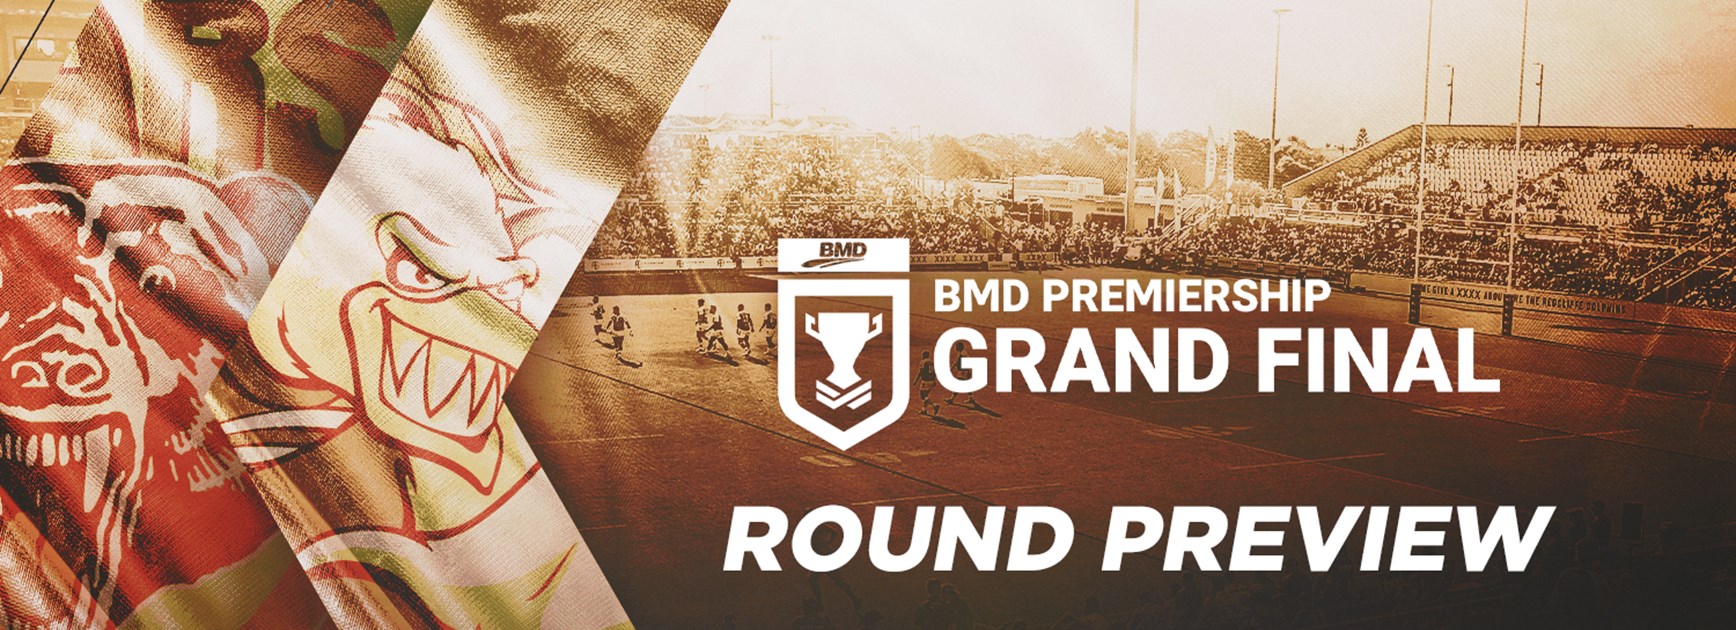 BMD Premiership grand final preview